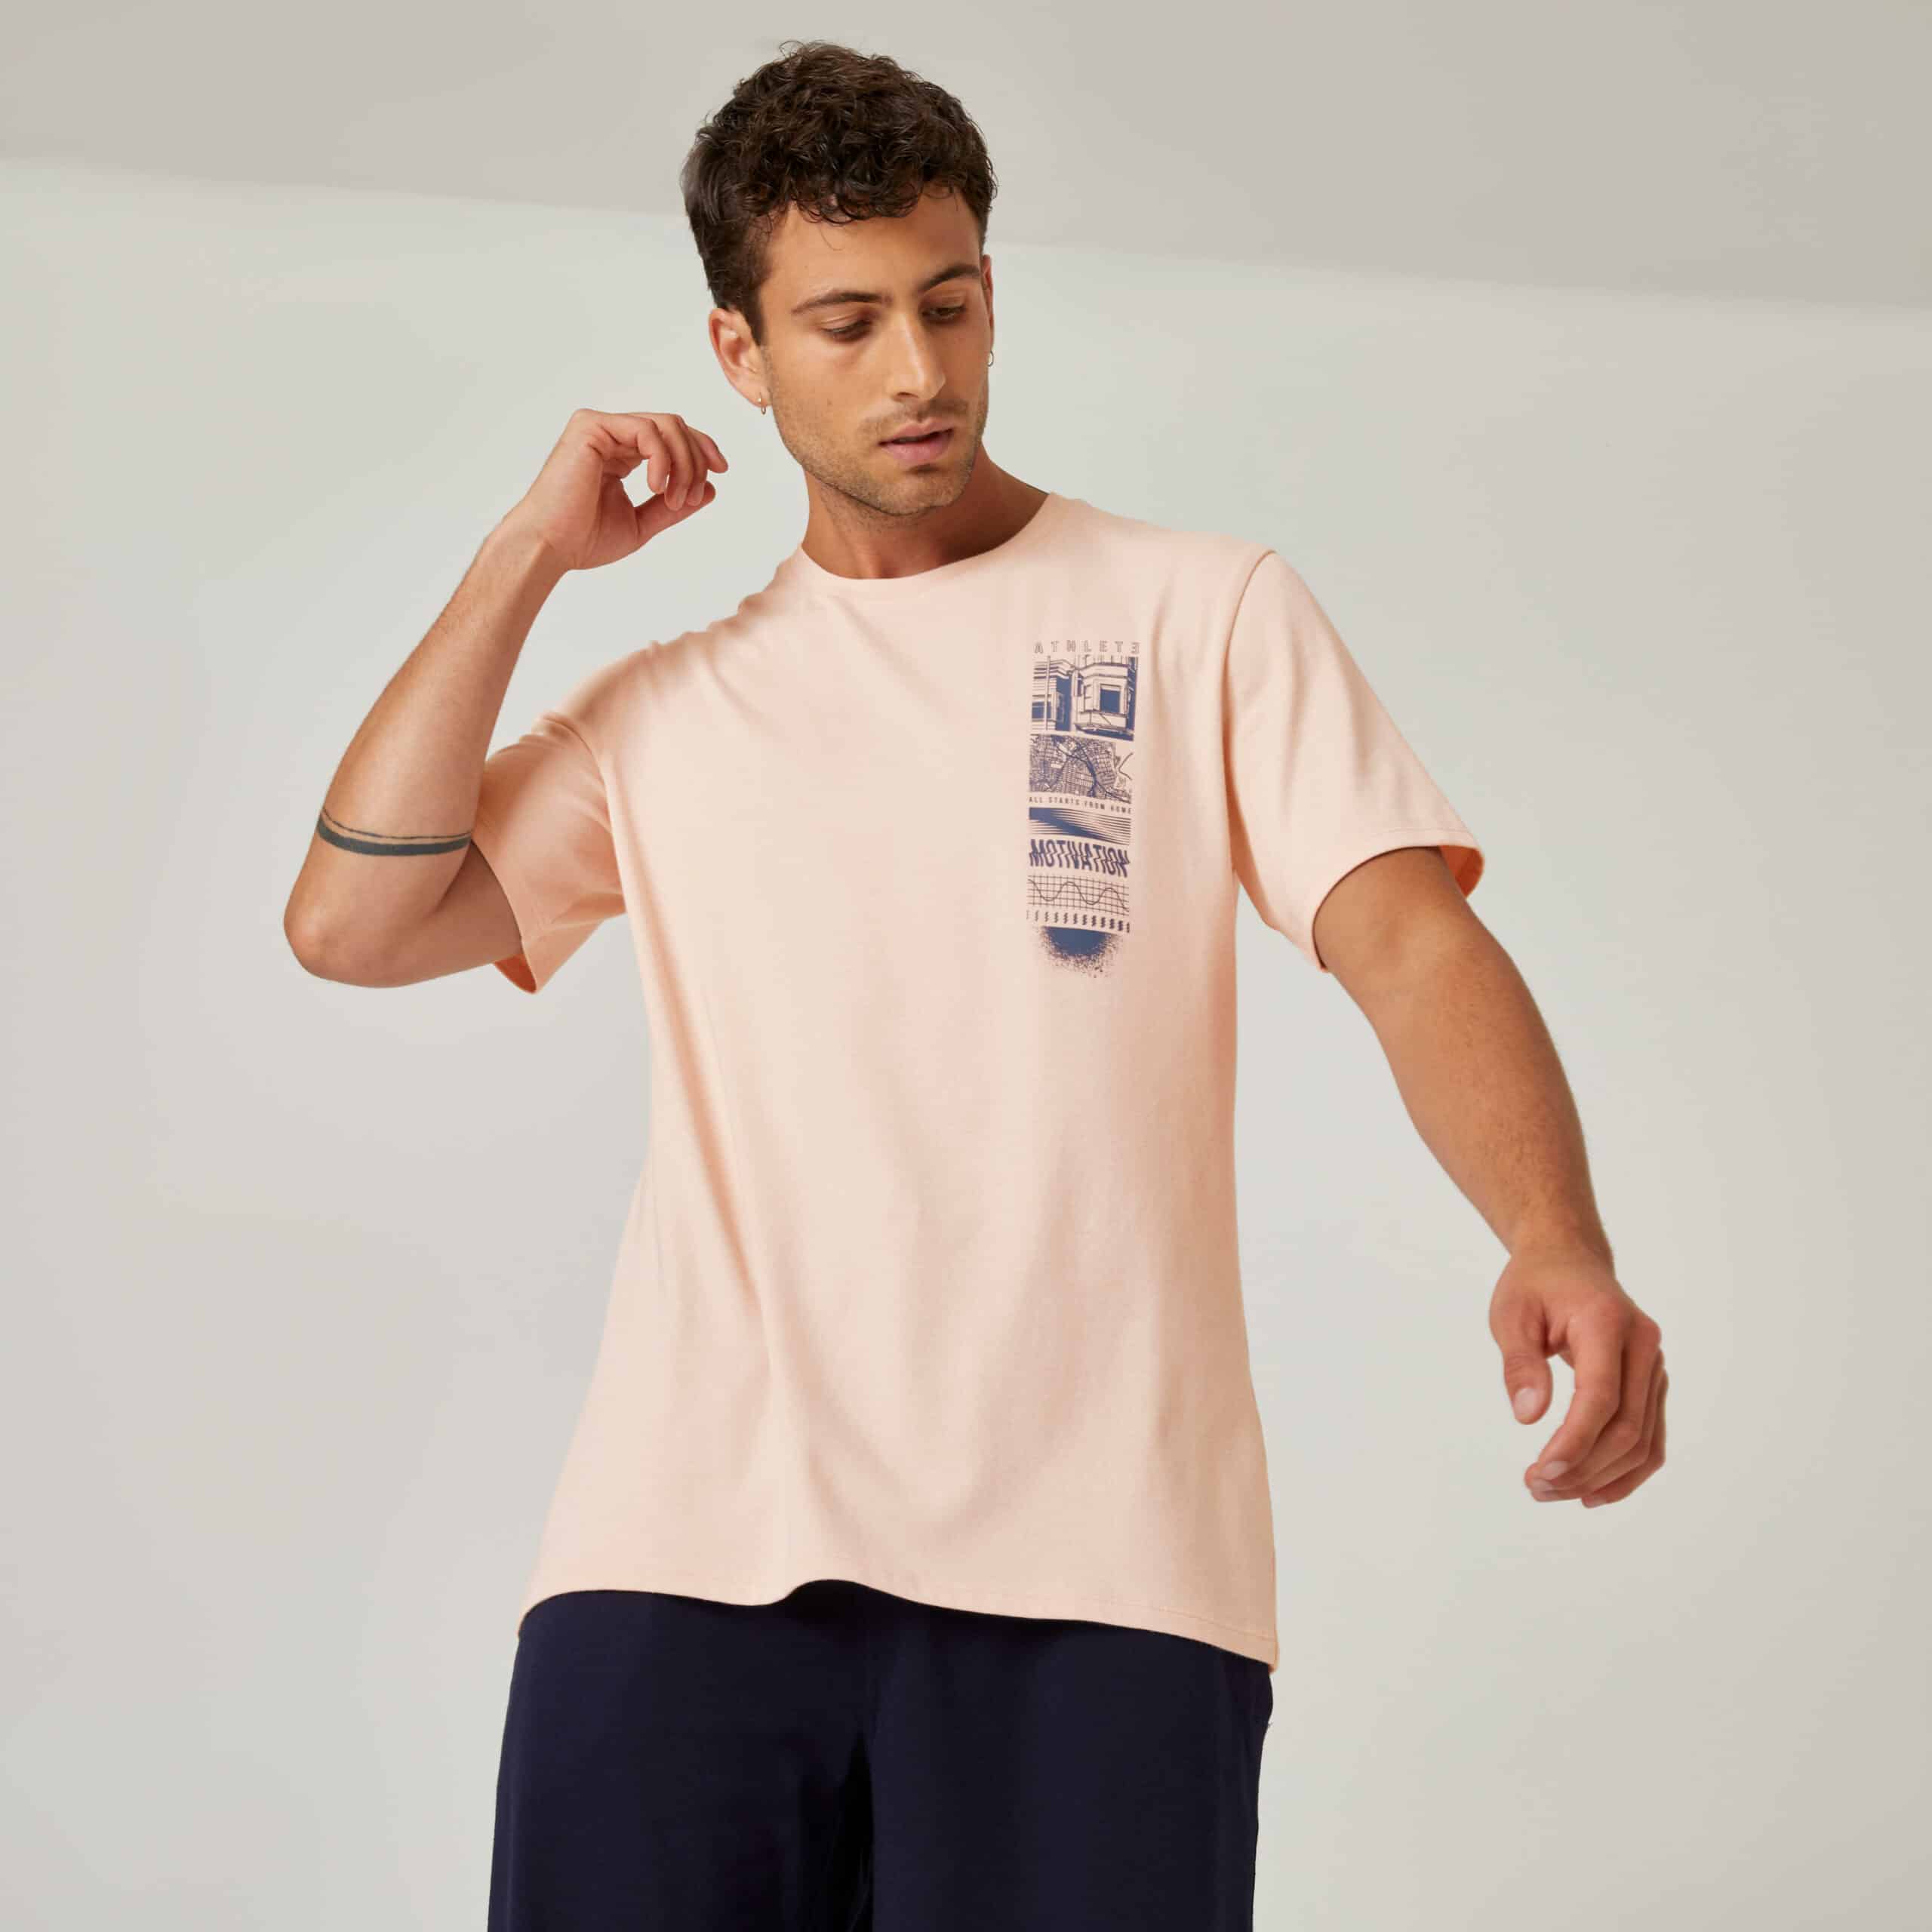 Domyos T-Shirt Herren Fitness Baumwolle dehnbar - 500 rosa